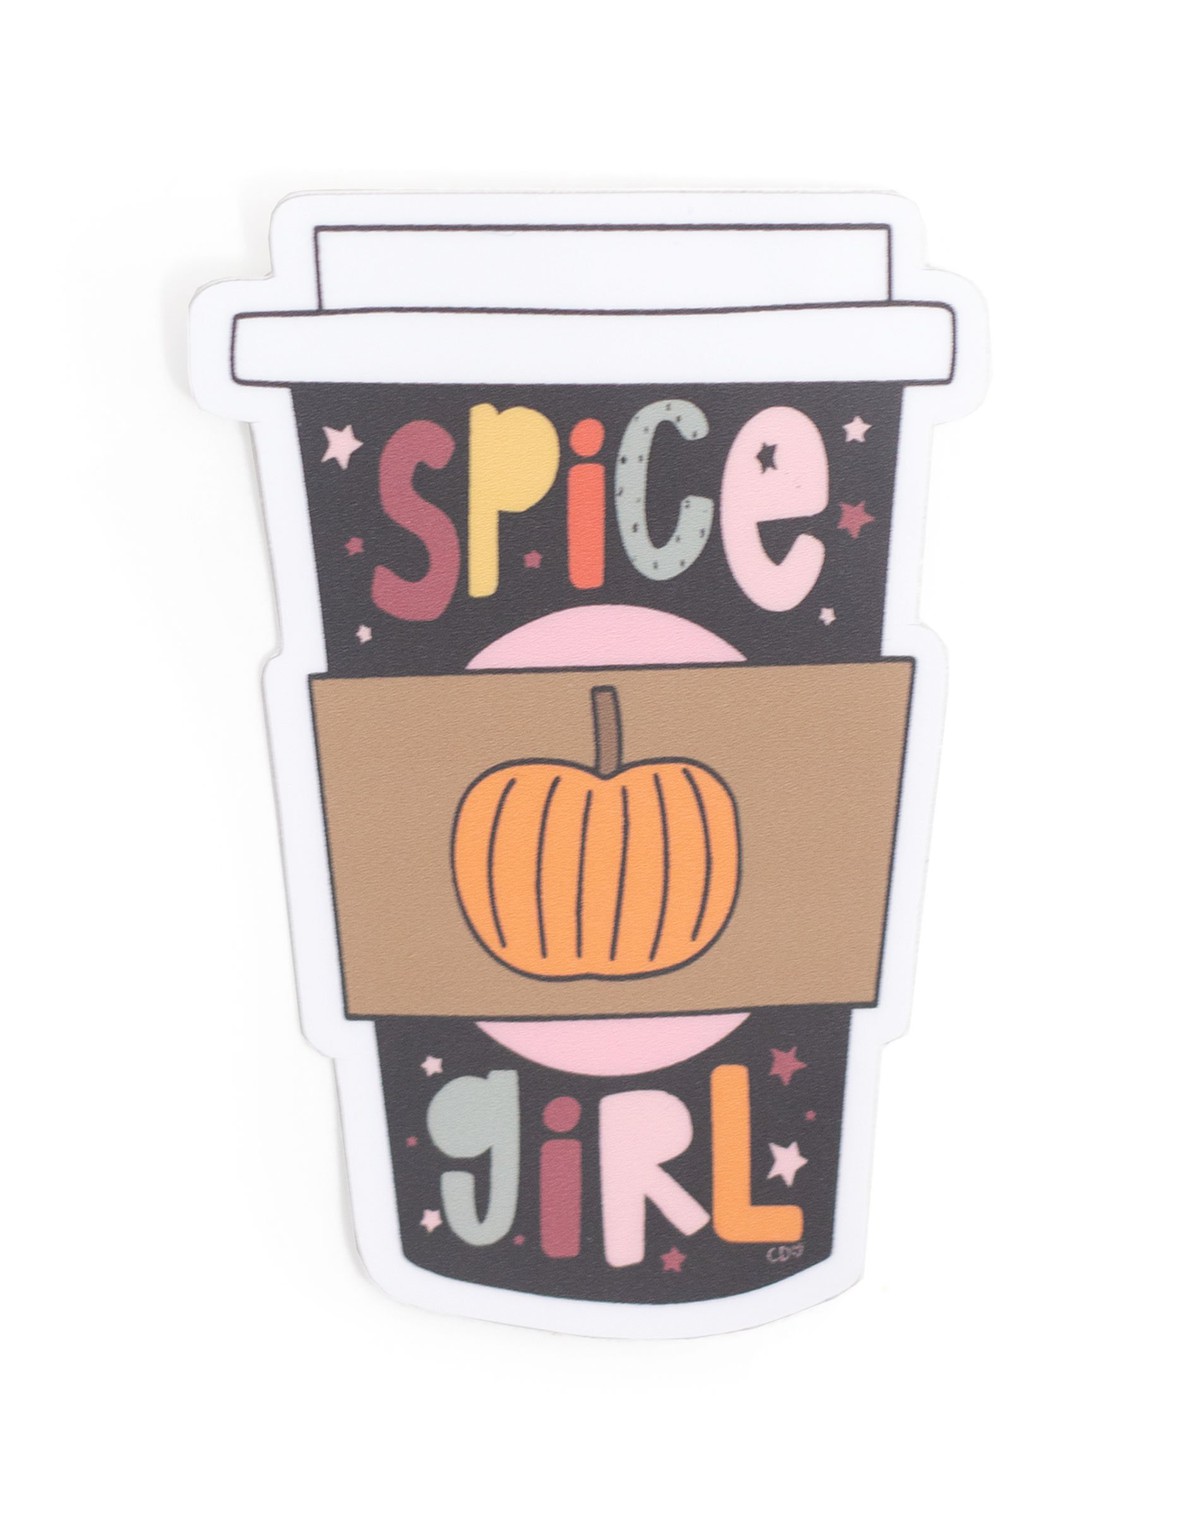 Spice Girl Decal Sticker item